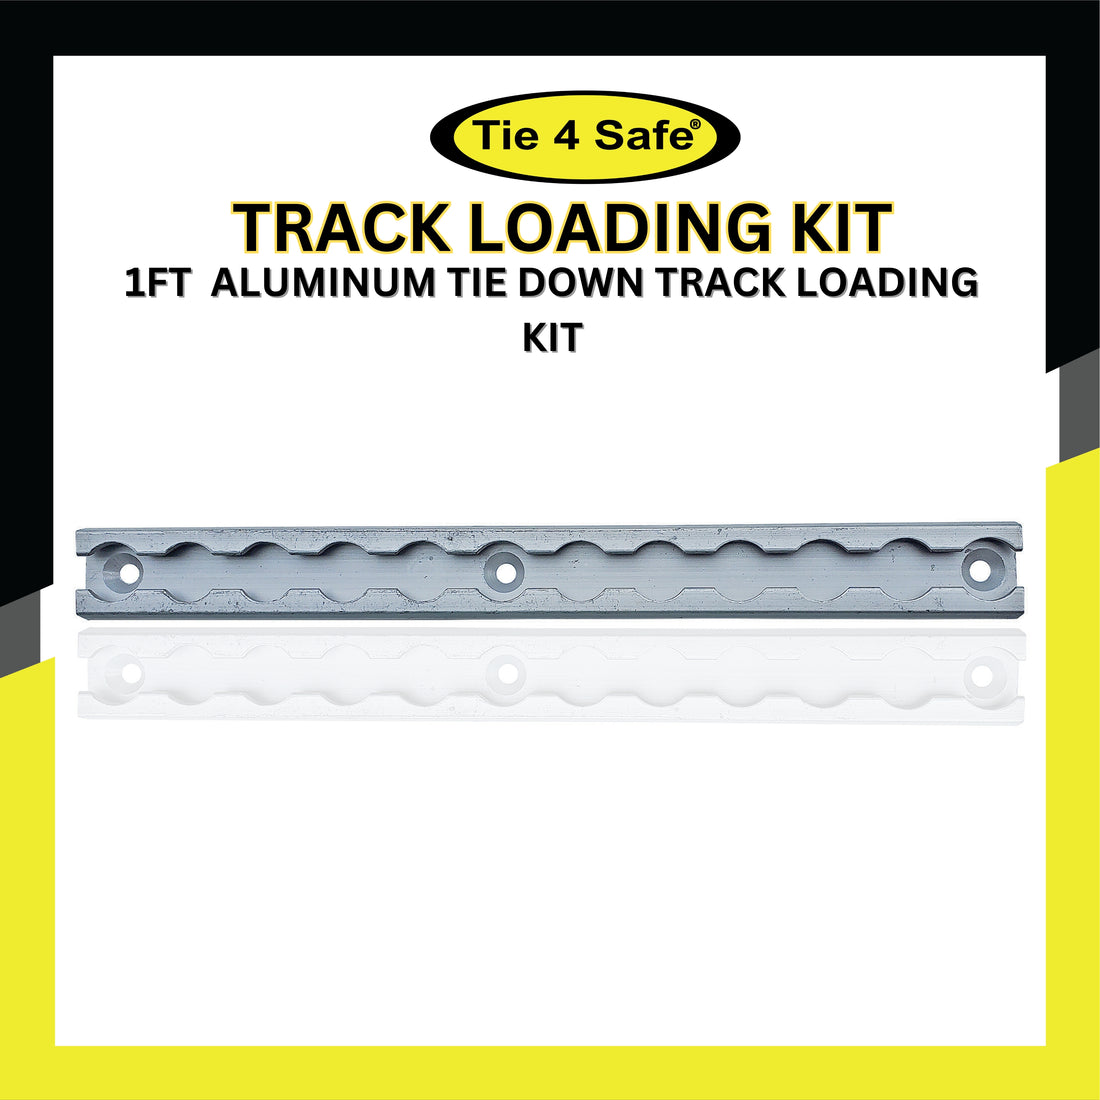 6" Tie Down Track Loading Kit, 2 Tracks + 2 Loading Rings